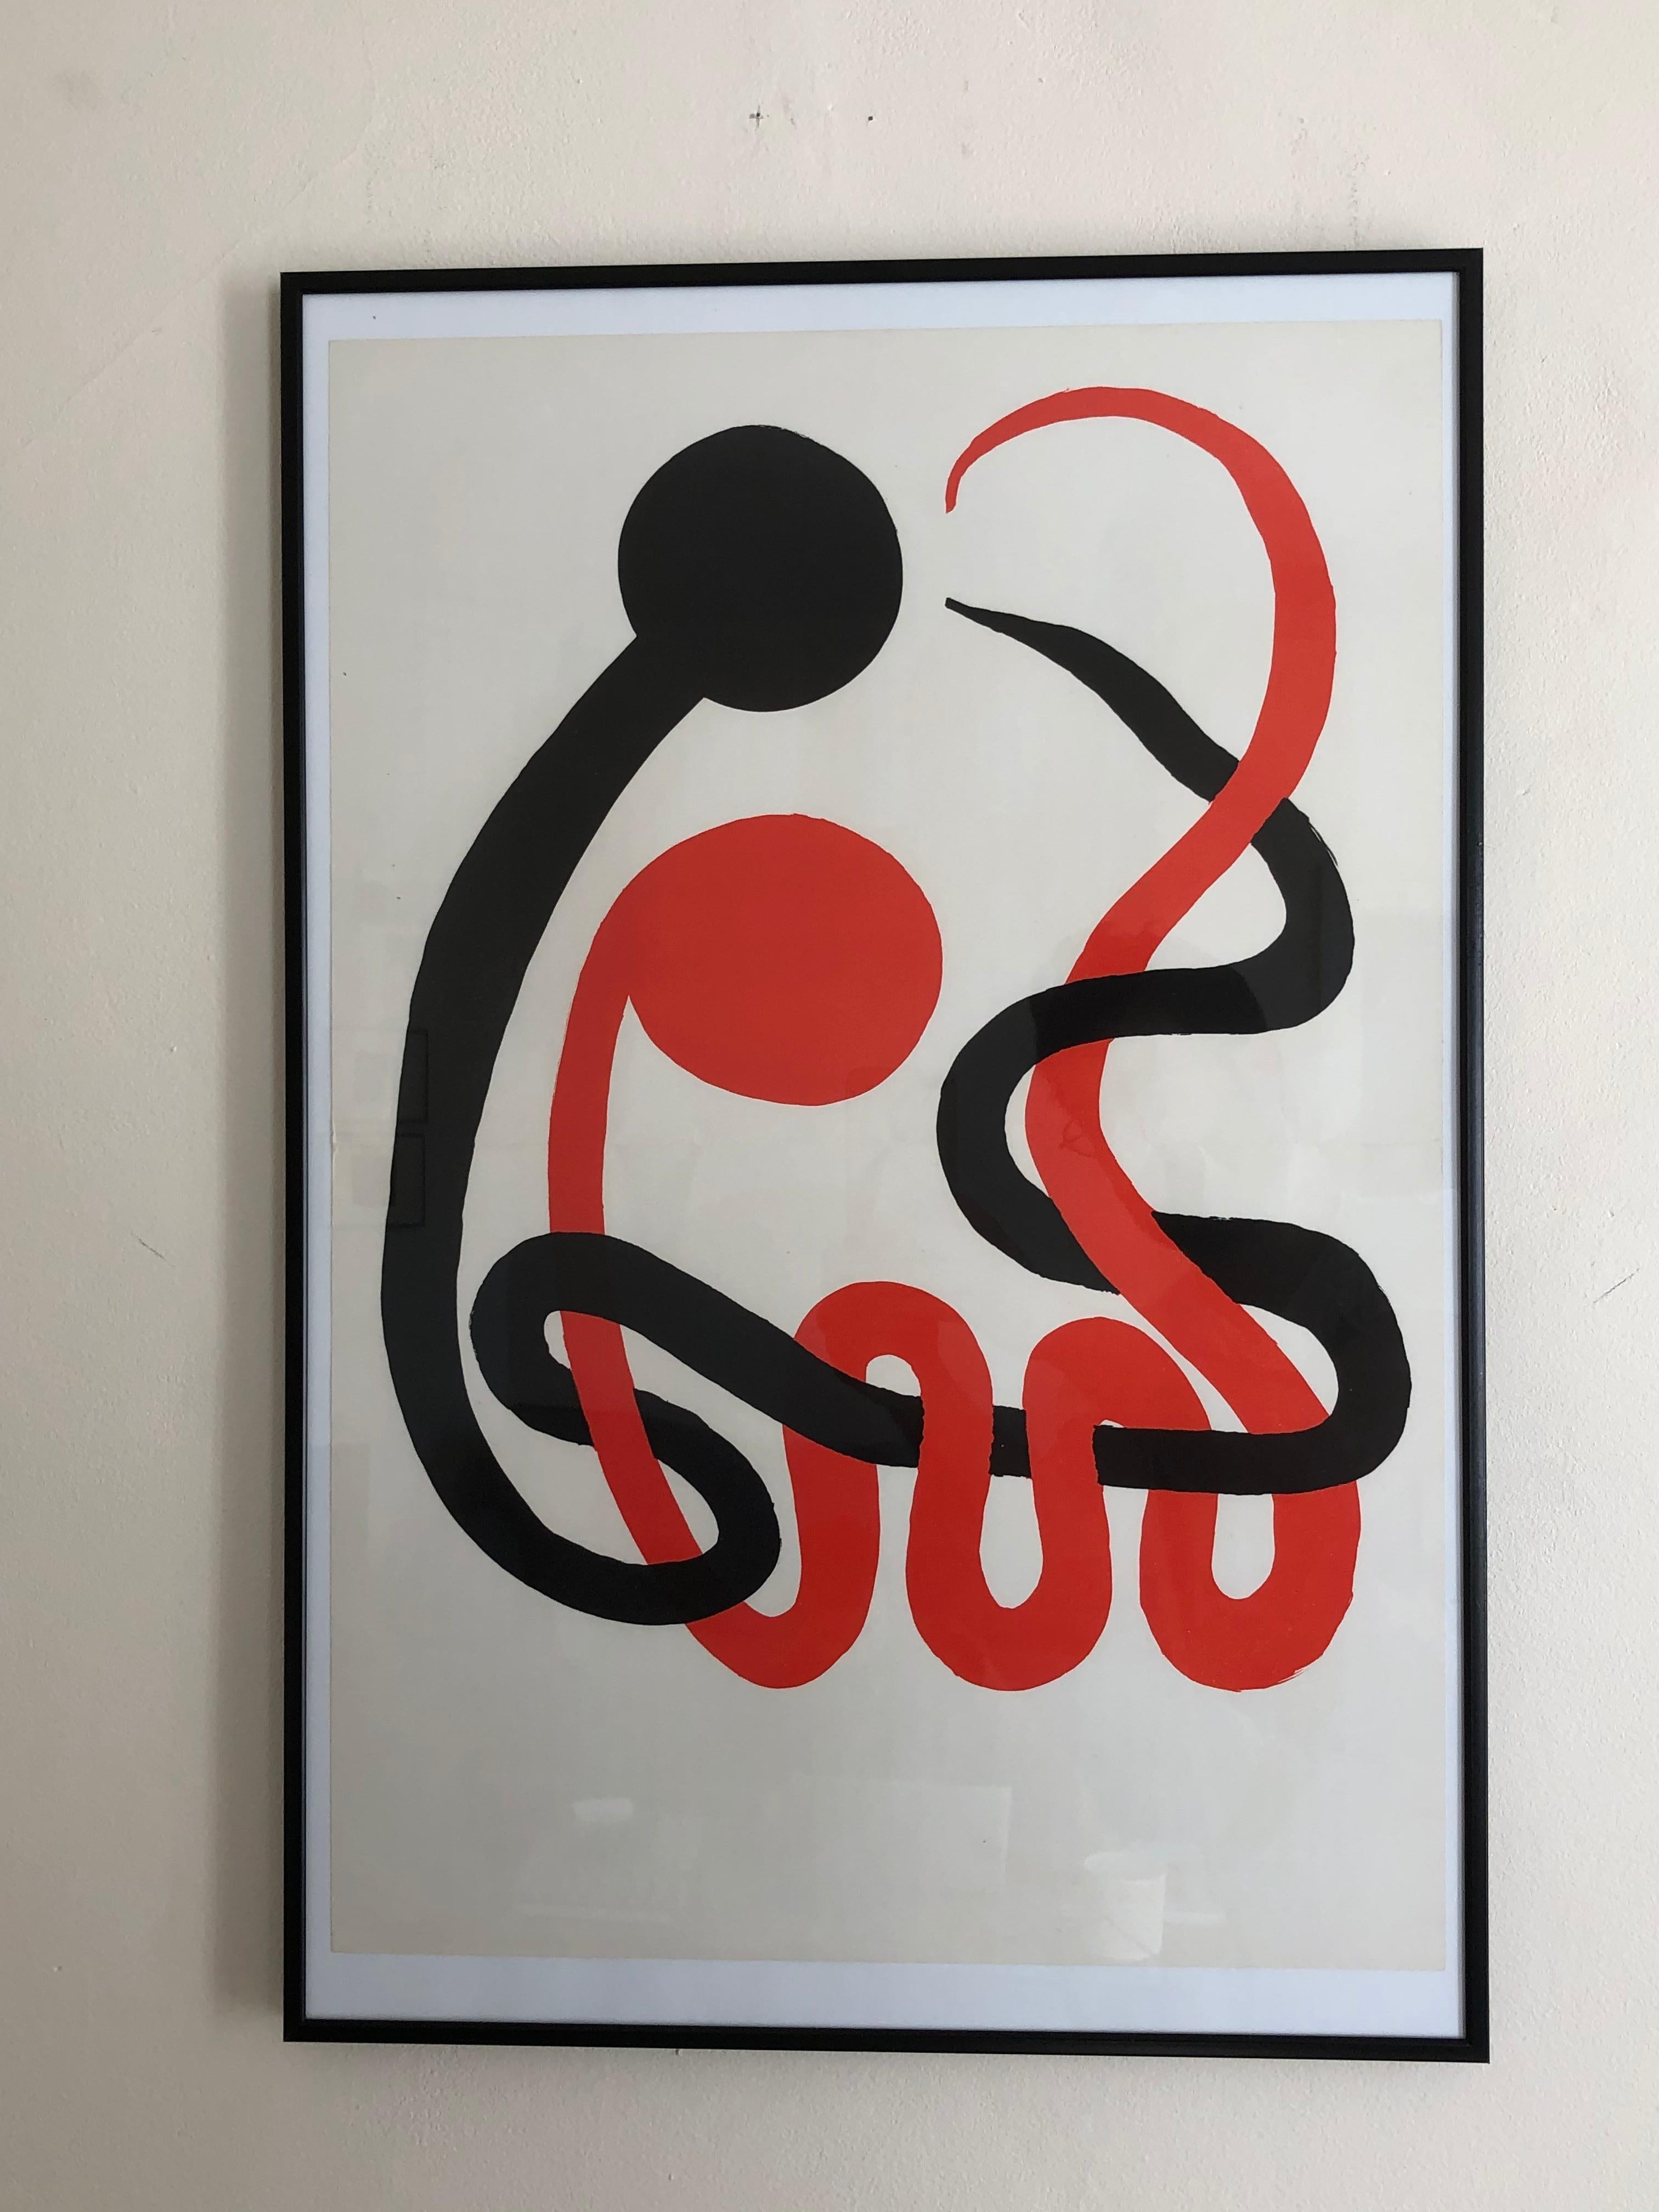 Alexander Calder (1898–1976)
Lithograph 